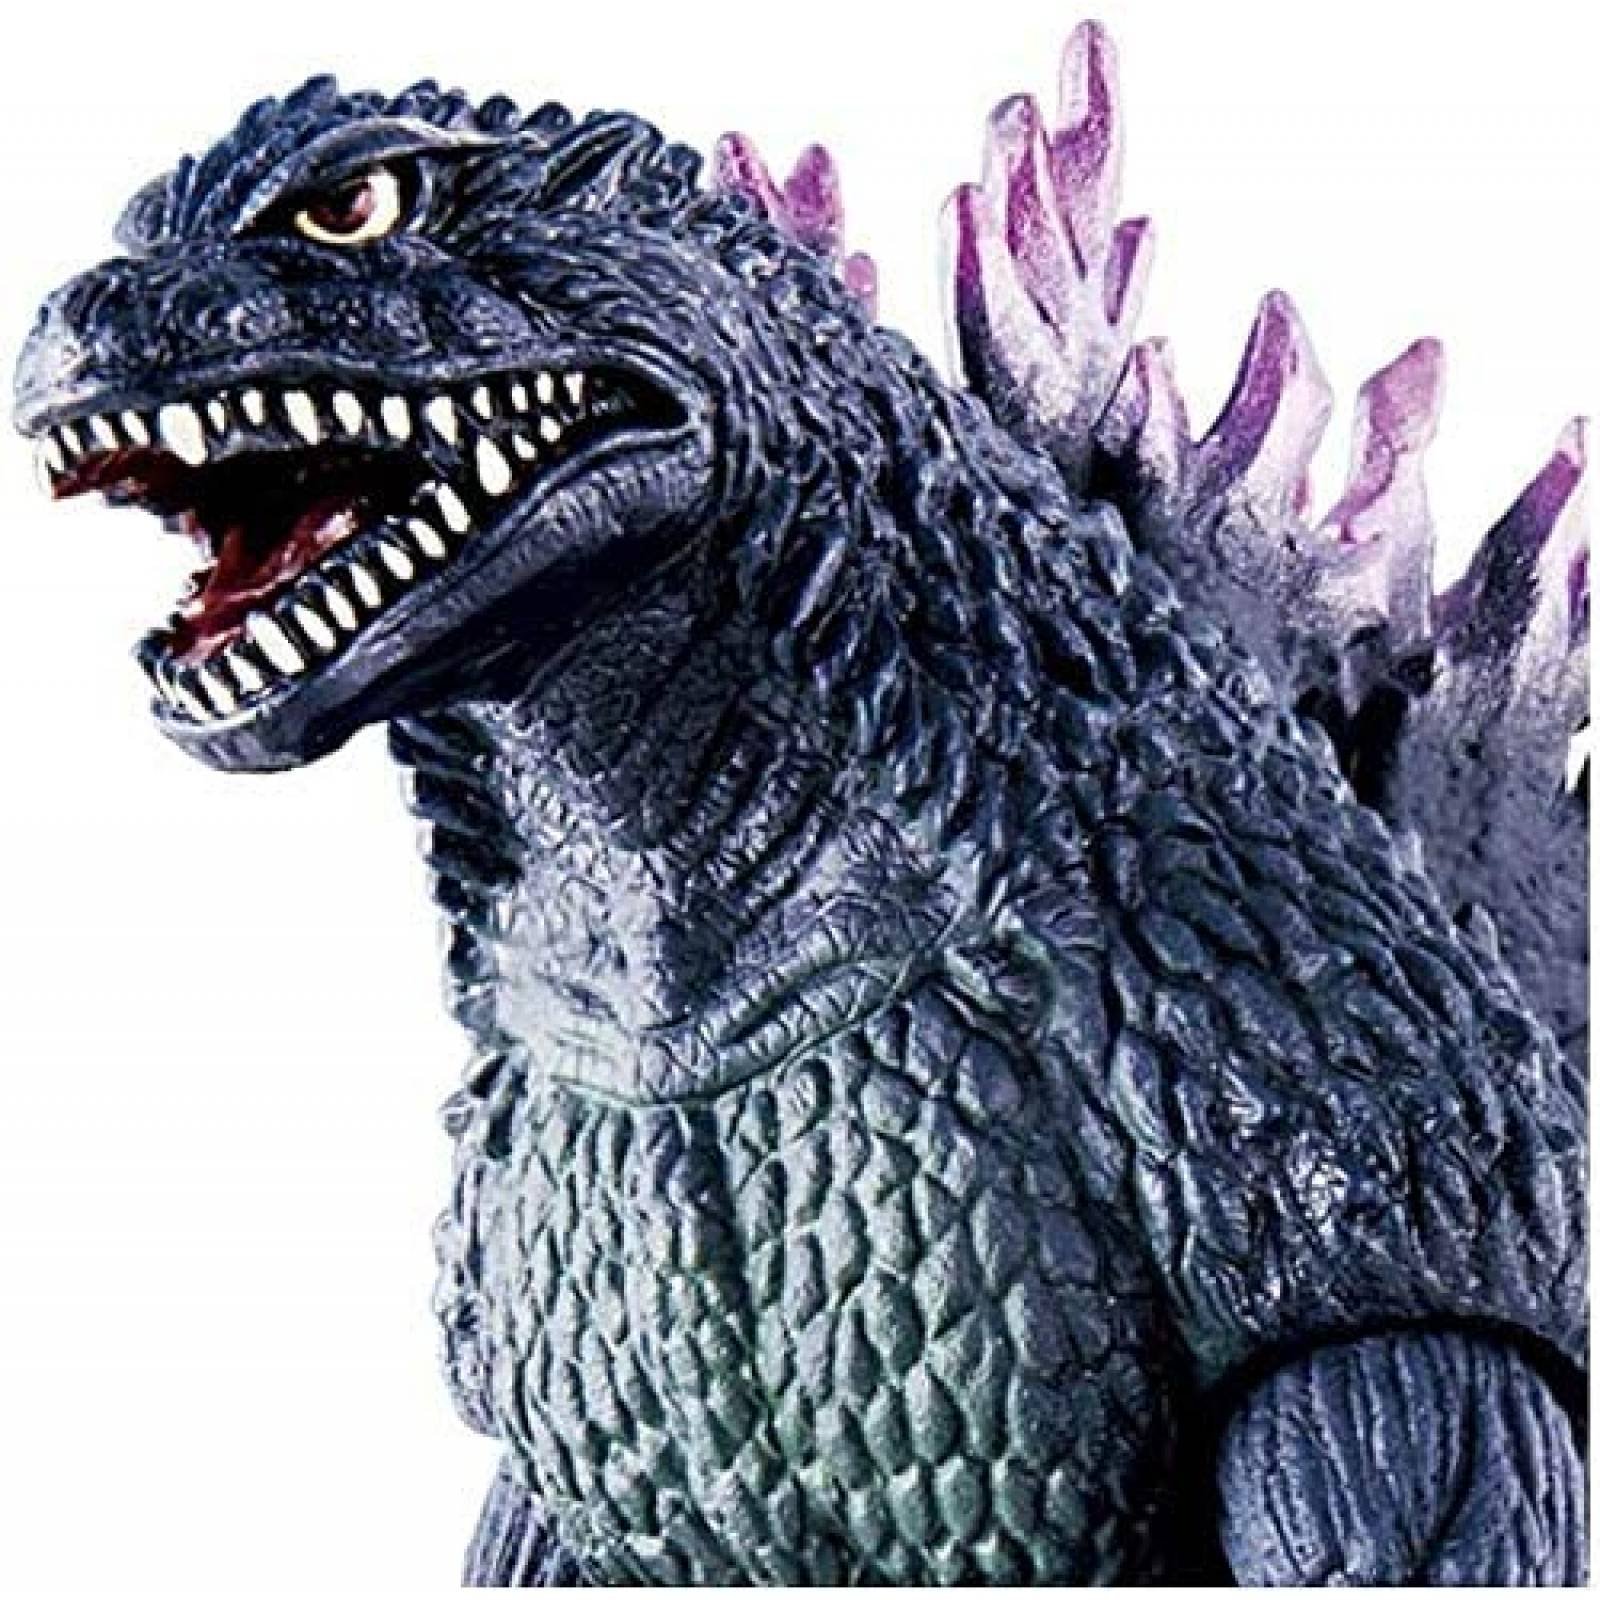 Juguete Bandai Godzilla Importado 6.1"